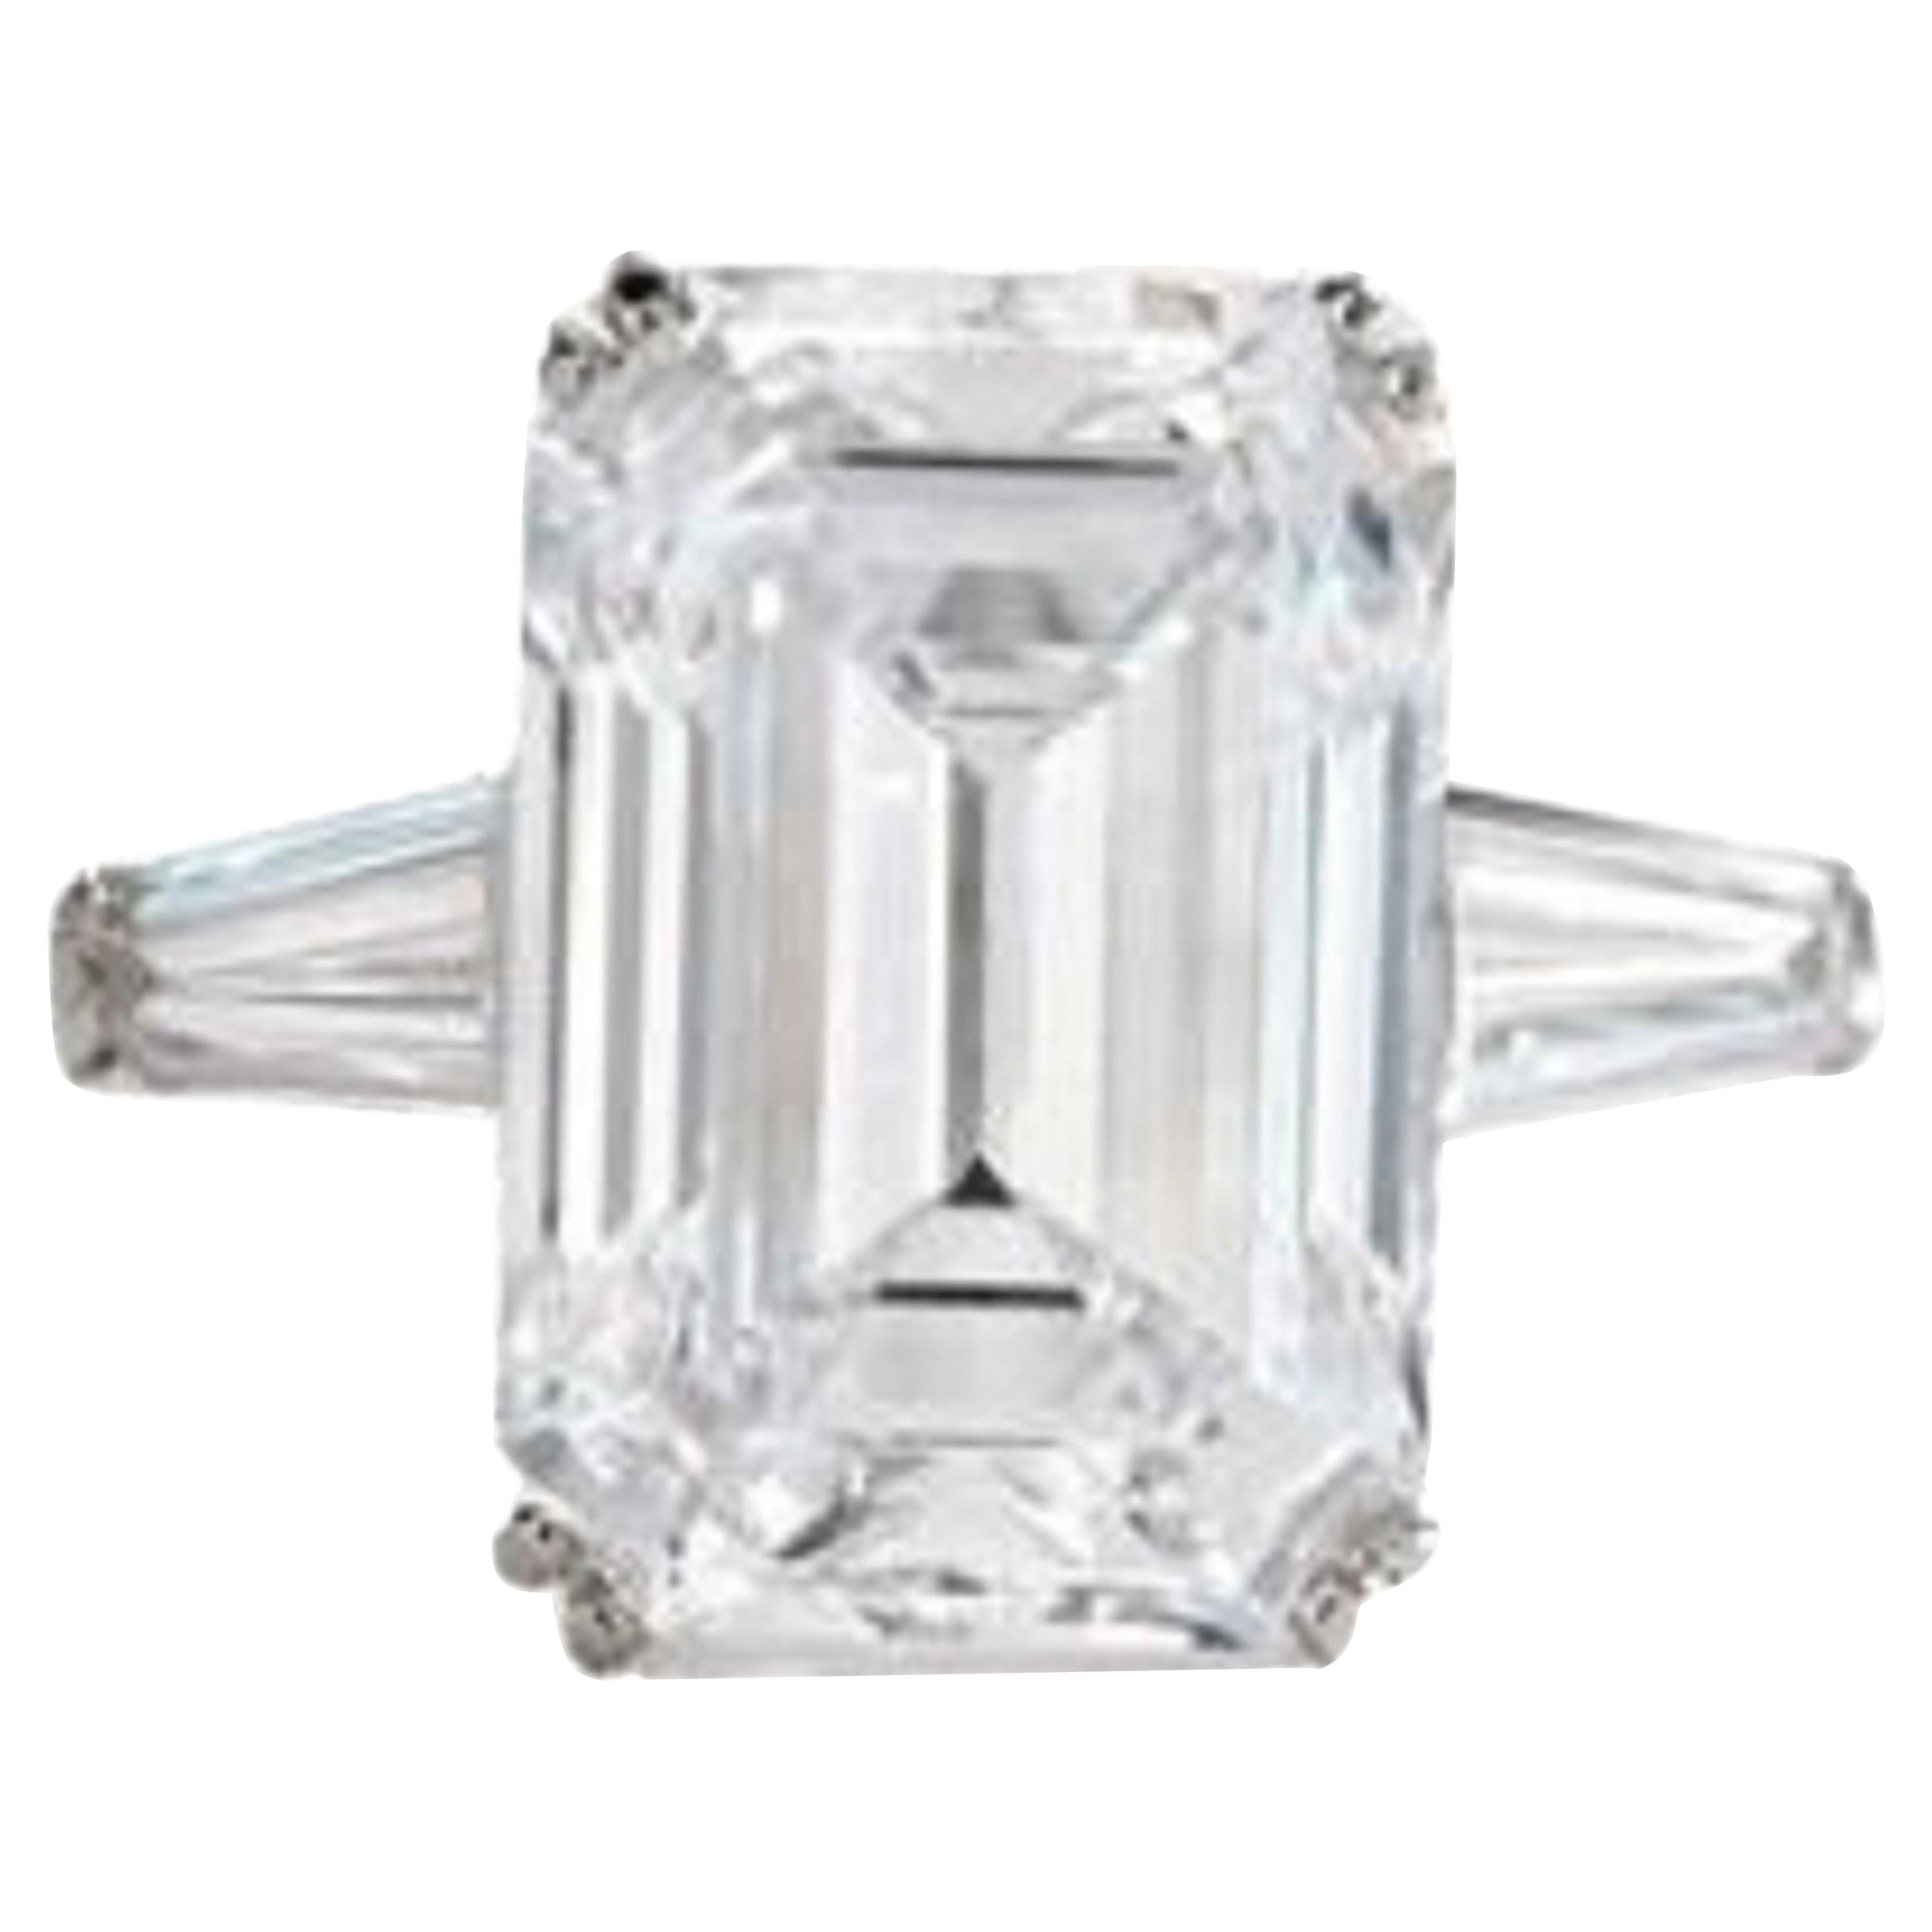 GIA Certified 3.51 Carat Emerald Cut Diamond Ring